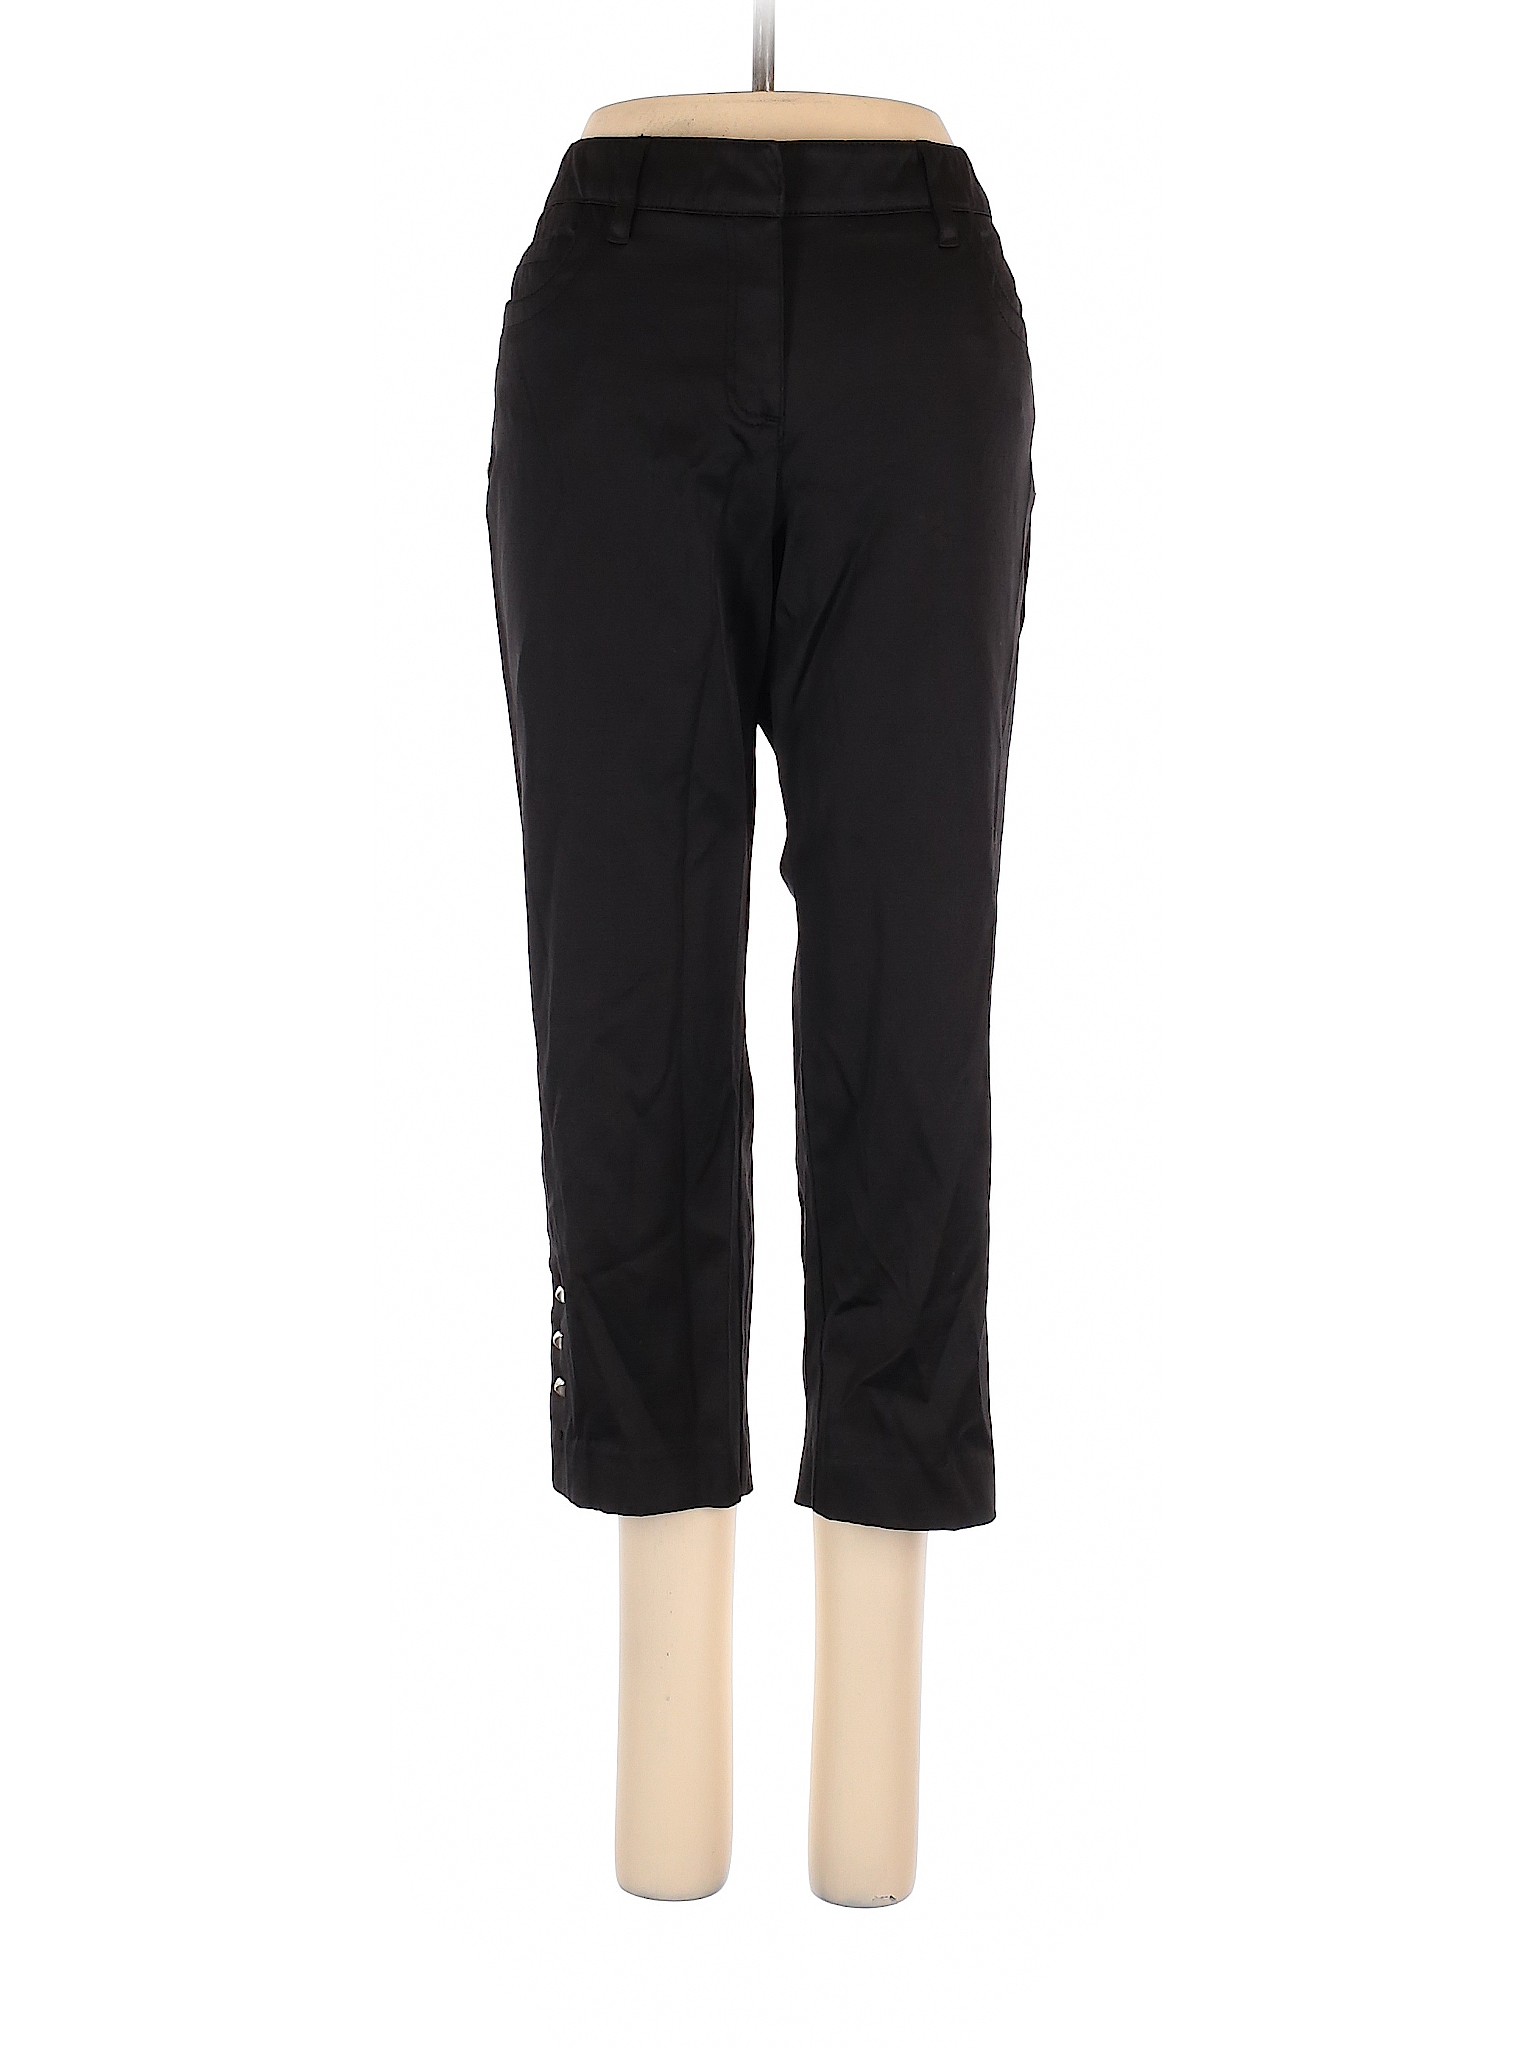 New Directions Women Black Casual Pants 8 | eBay